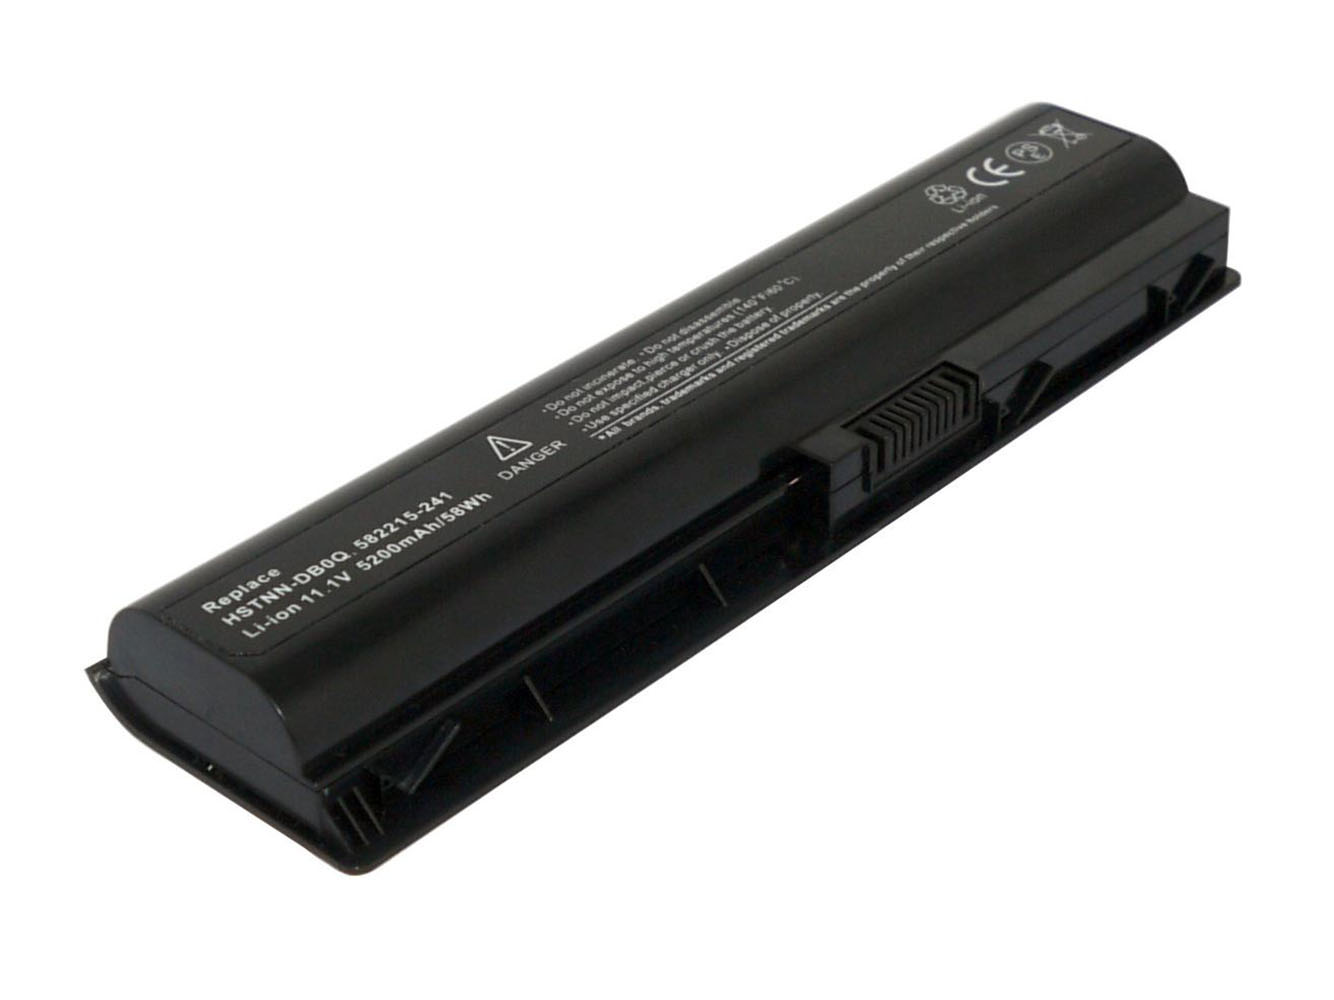 Hp 582215-241, 586021-001 Laptop Batteries For Touchsmart Tm2, Touchsmart Tm2 2105eg replacement